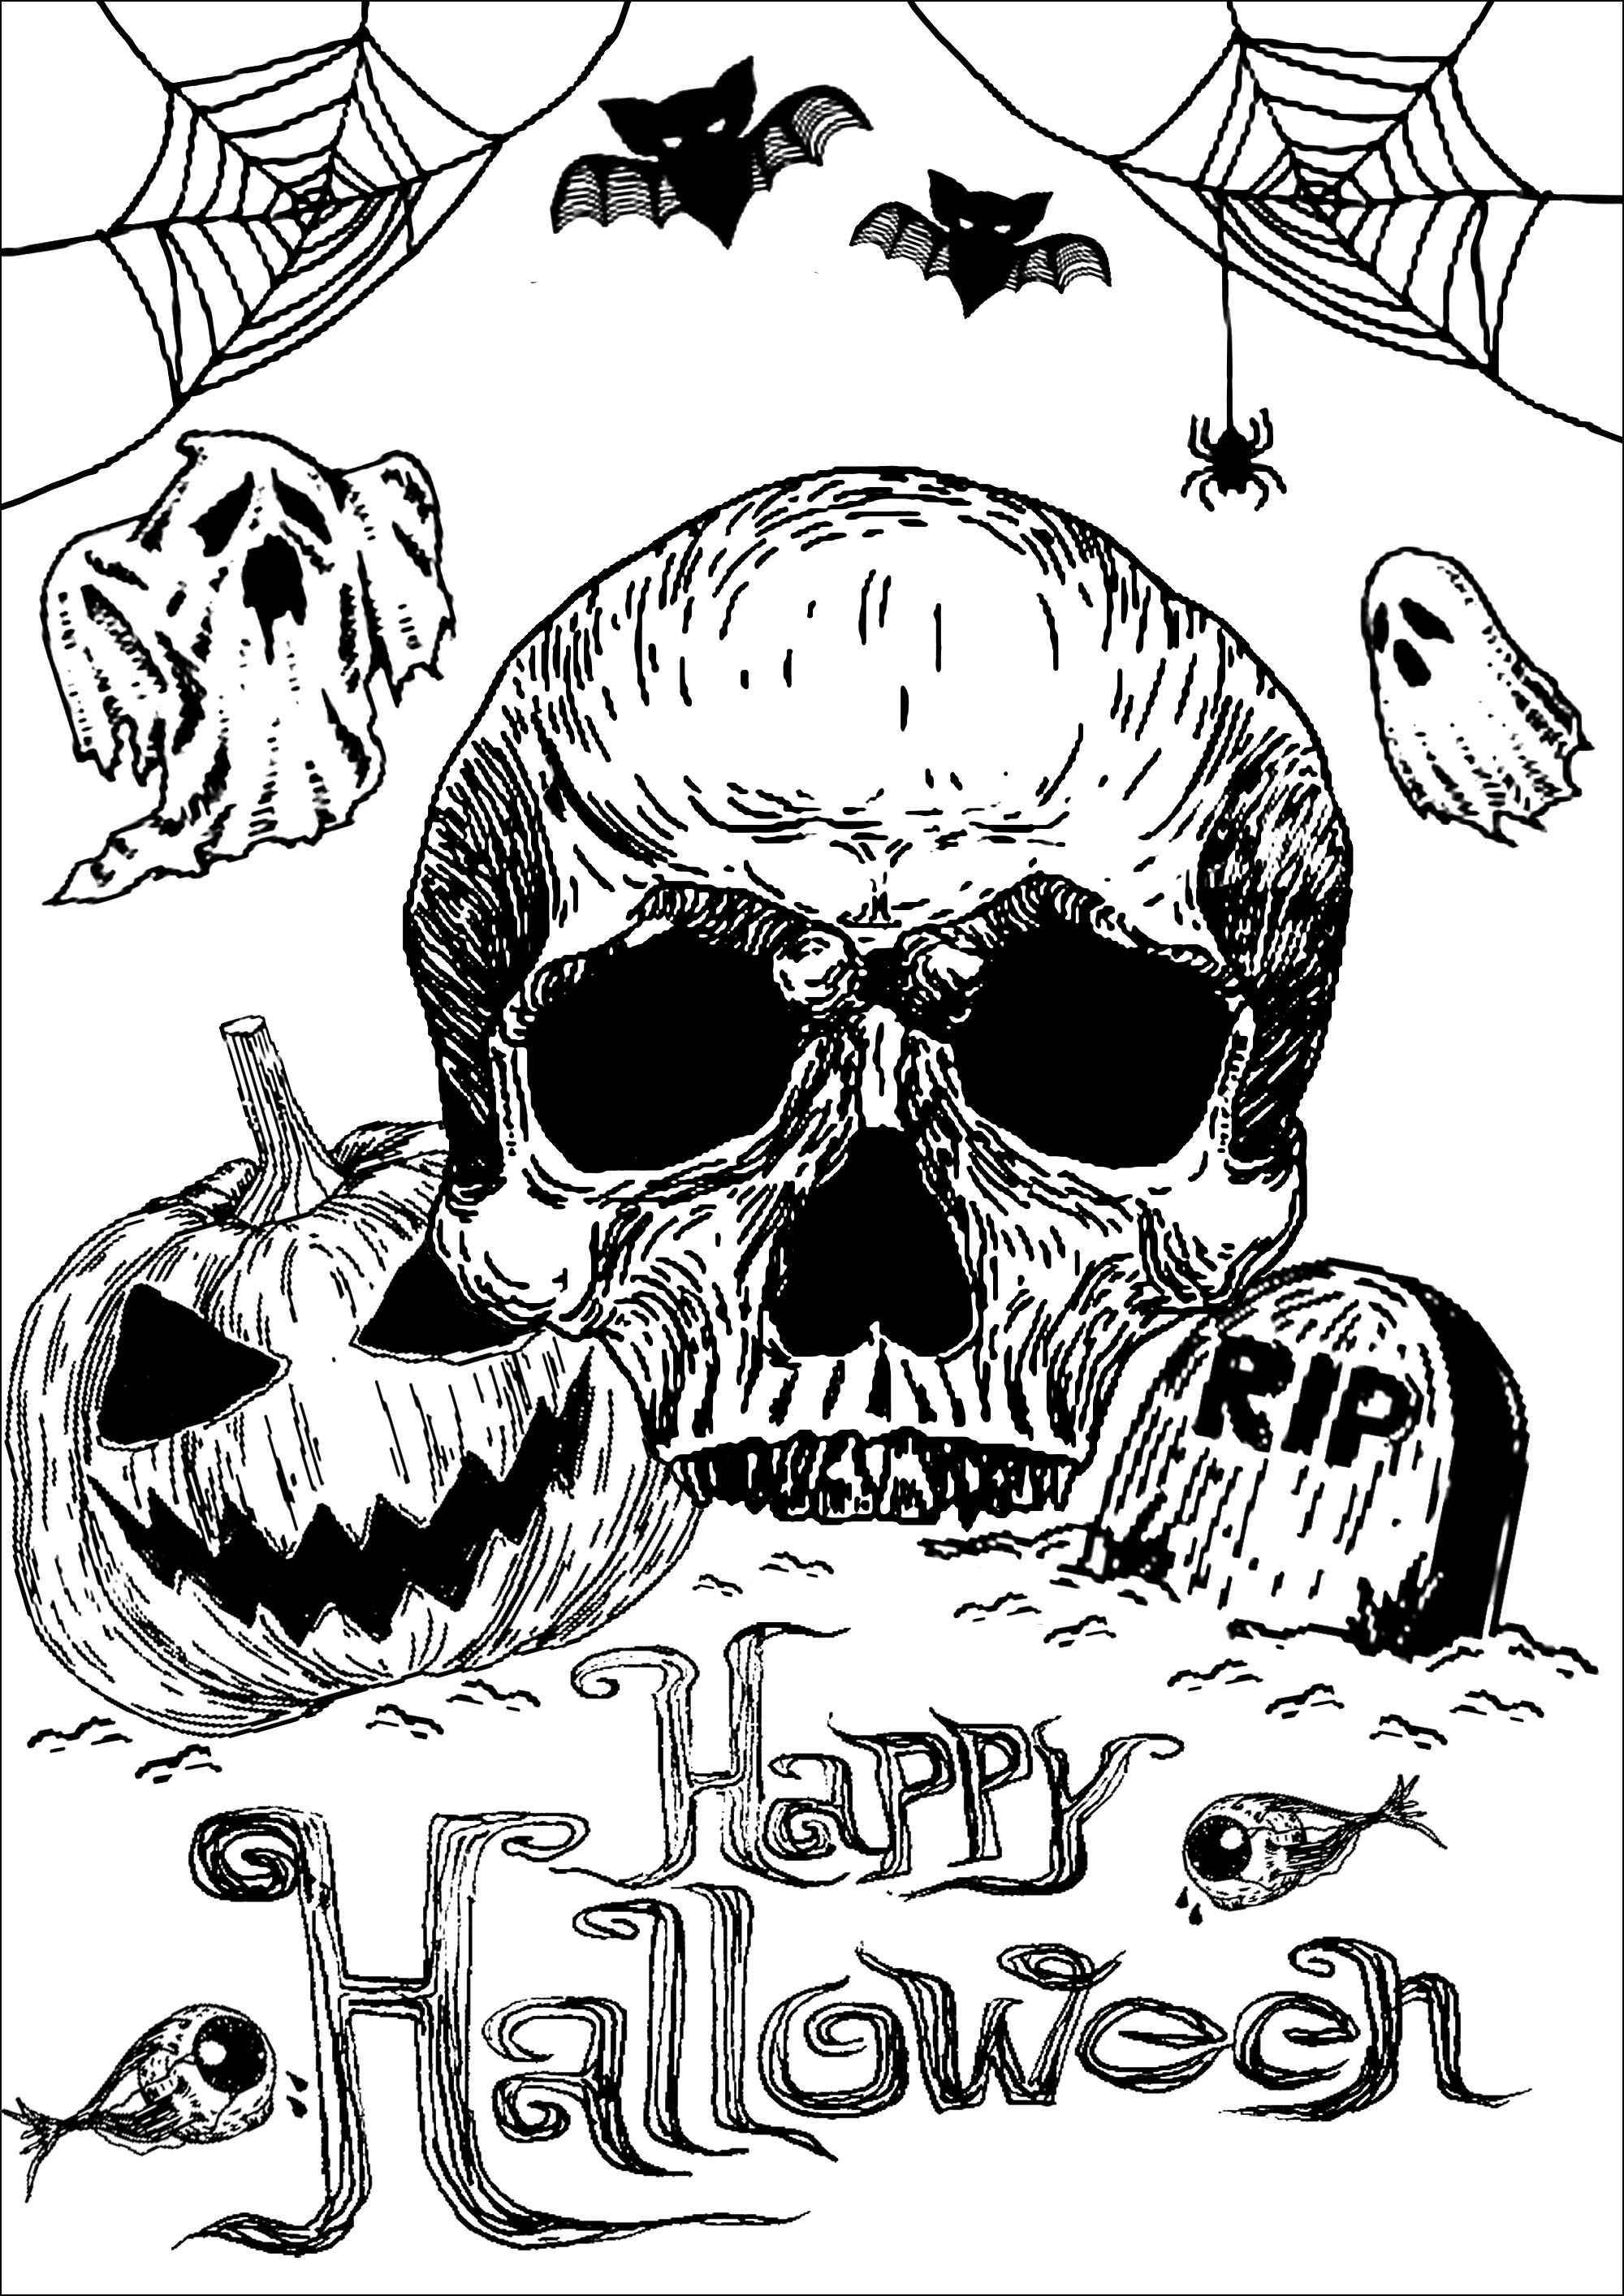 Colorea esta calavera, calabaza y tumba para Halloween ... con bonitos fantasmas, murciélagos, telarañas ...